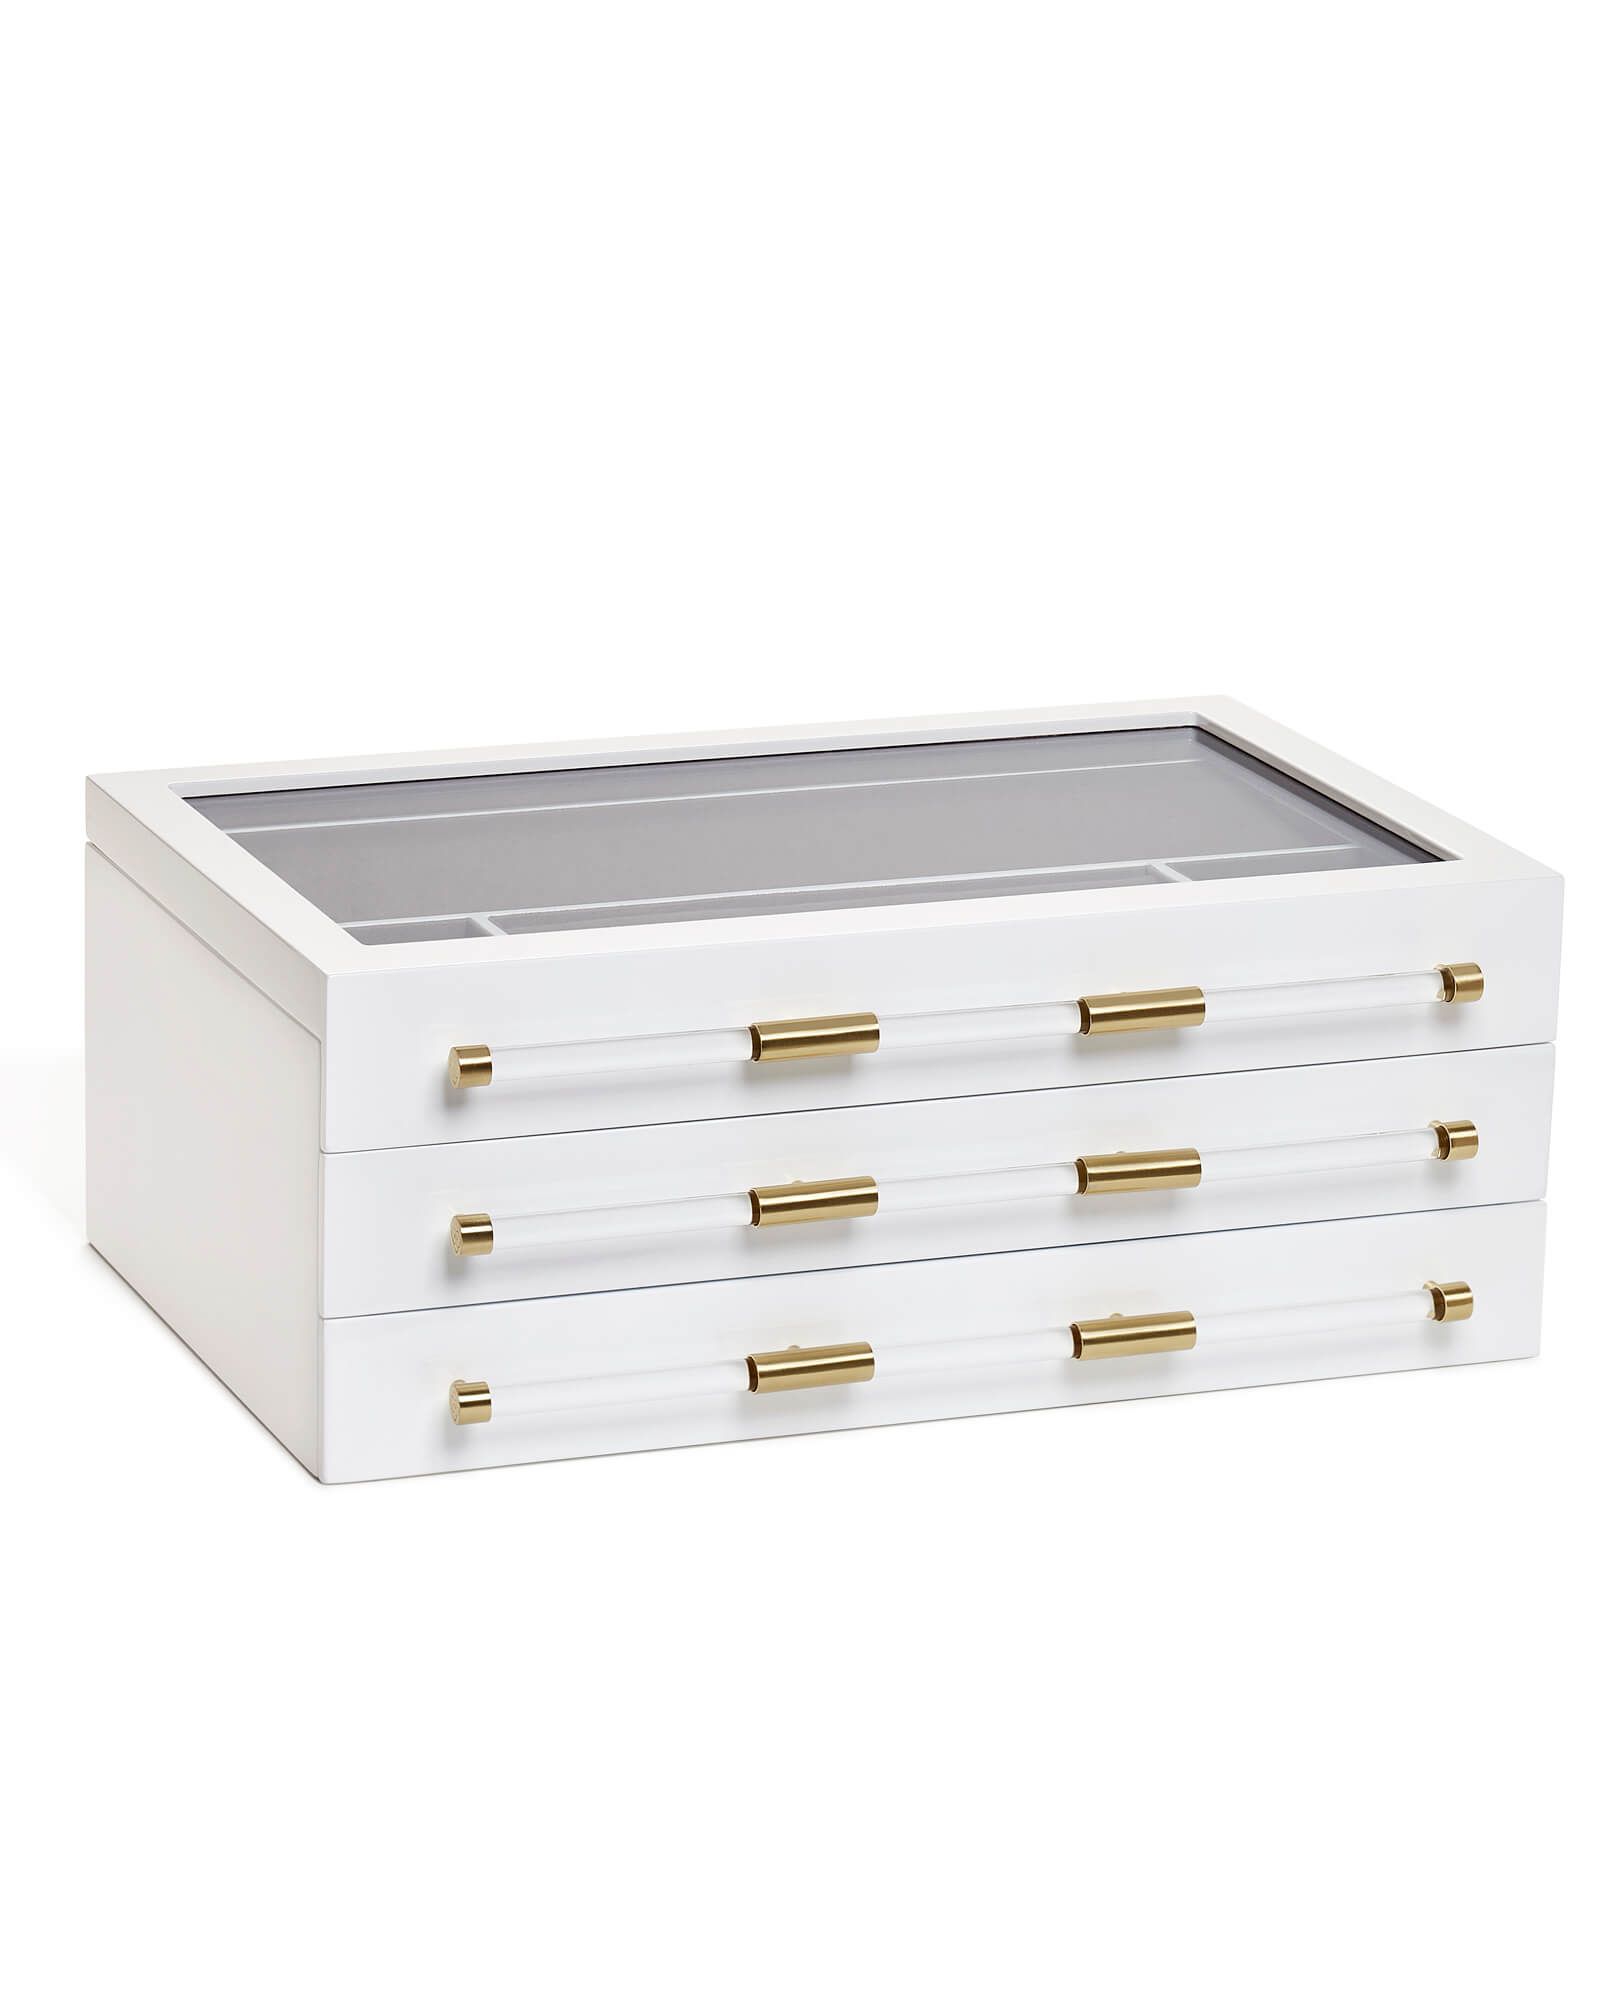 Large Antique Brass Jewelry Box in White Lacquer | Kendra Scott | Kendra Scott